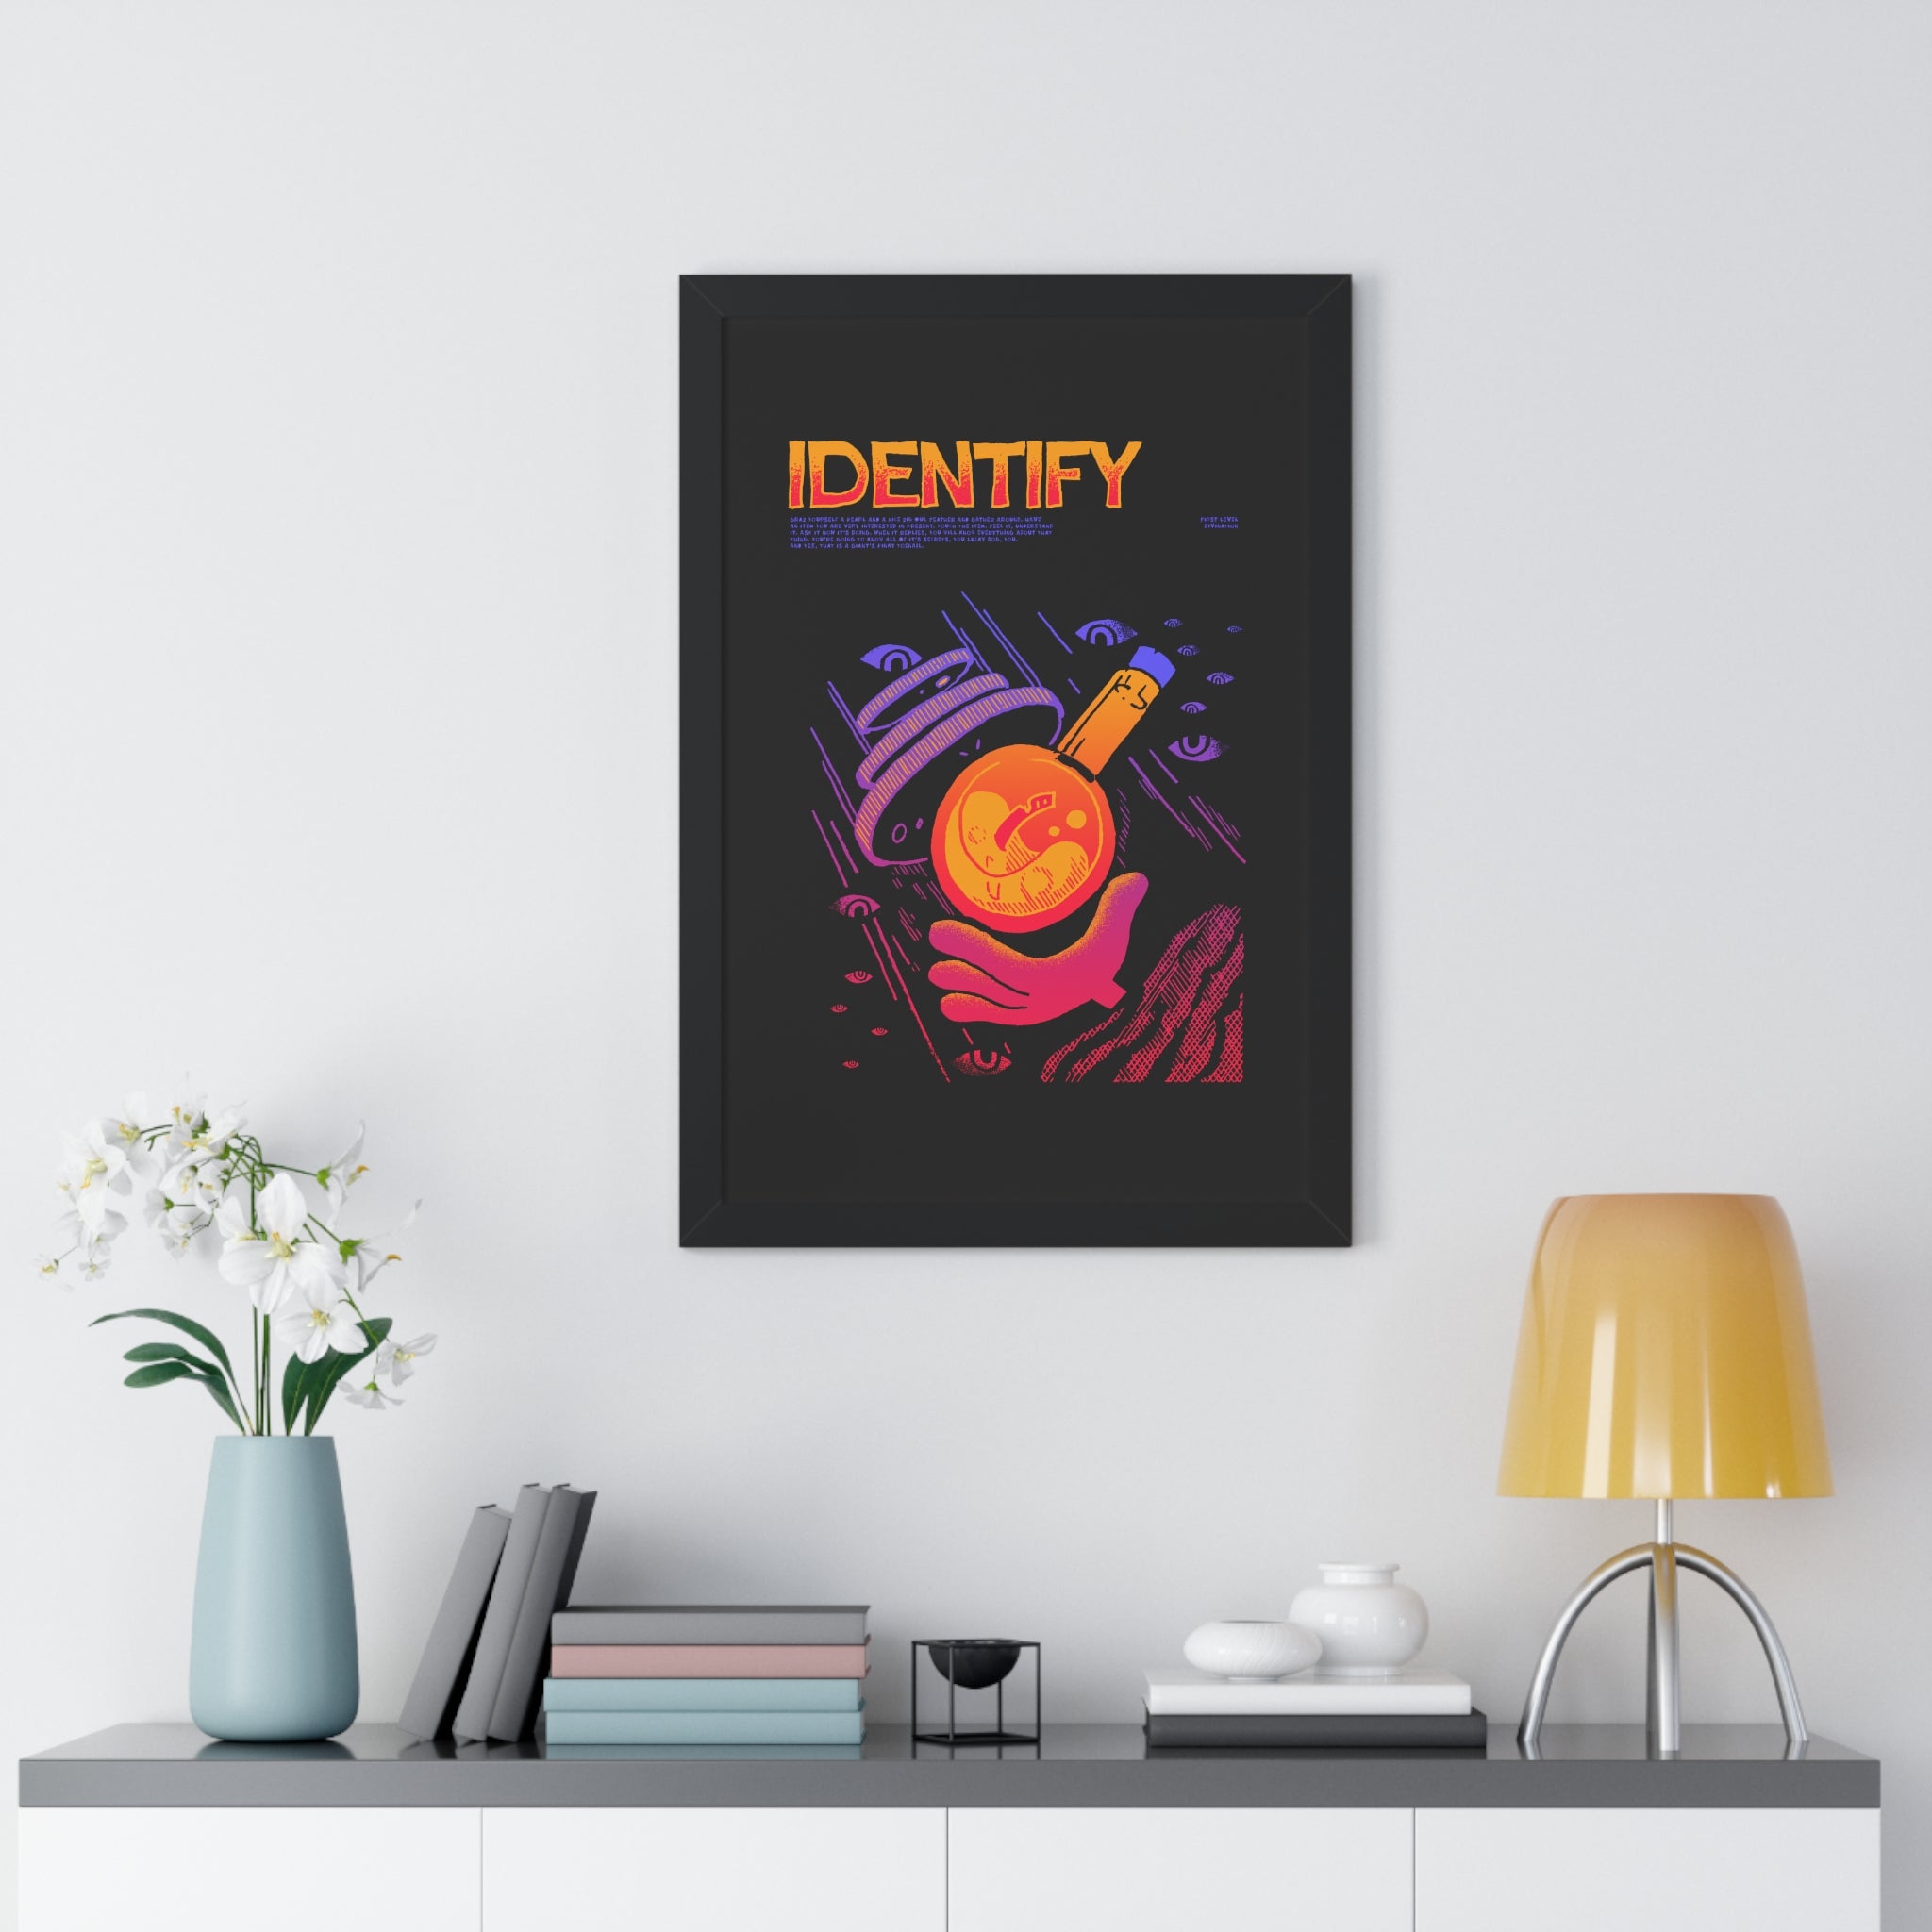 Identify | Framed Poster - Framed Poster - Ace of Gnomes - 18529739692701442962